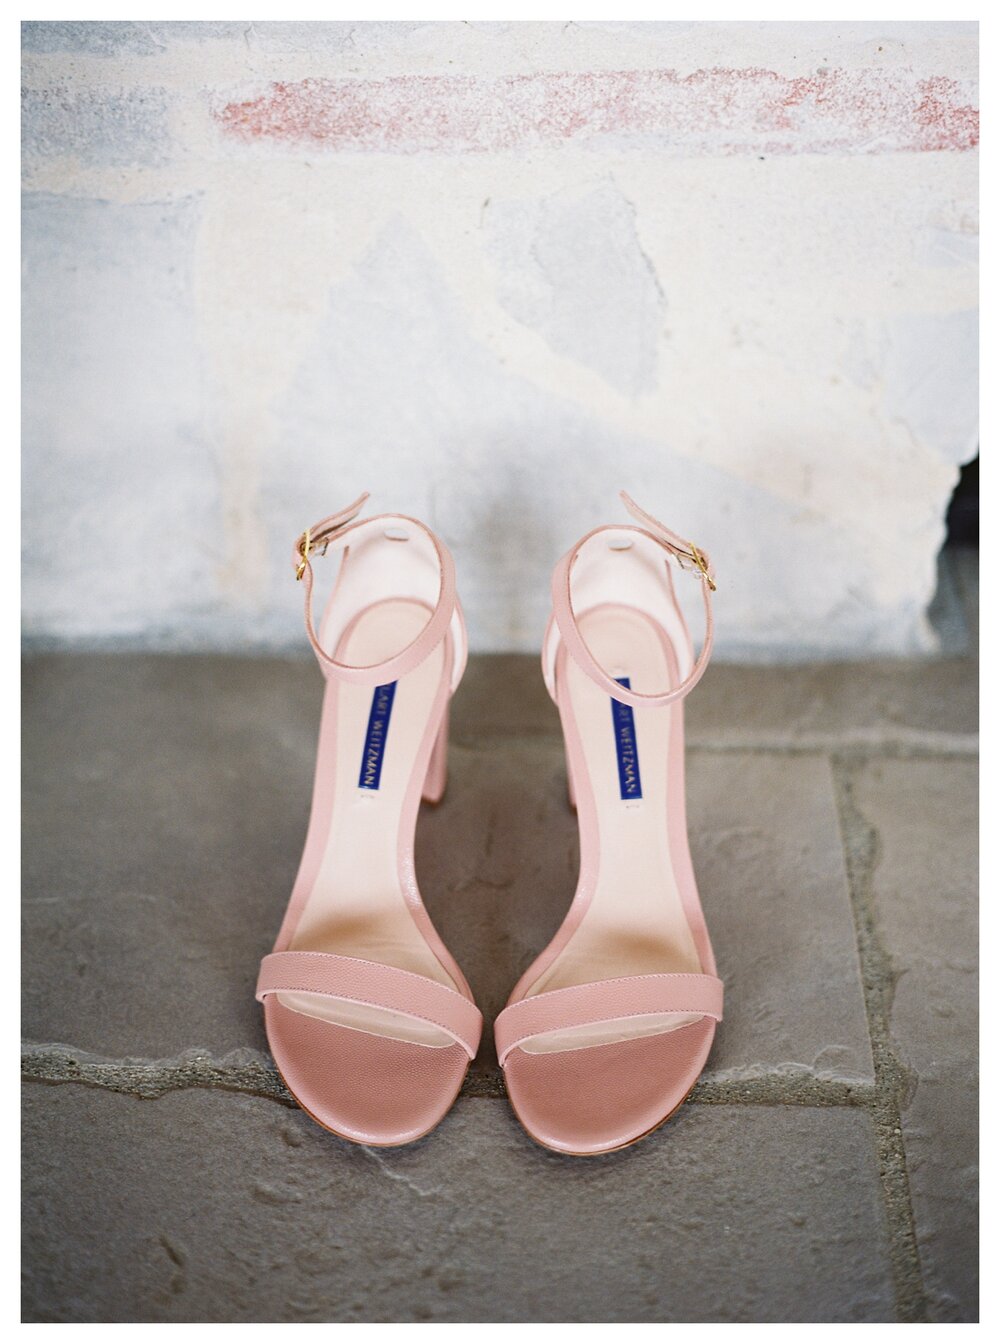  bride shoes pink, wedding shoes bride pink, wedding shoes bride heels pink, florence wedding, tuscany wedding 